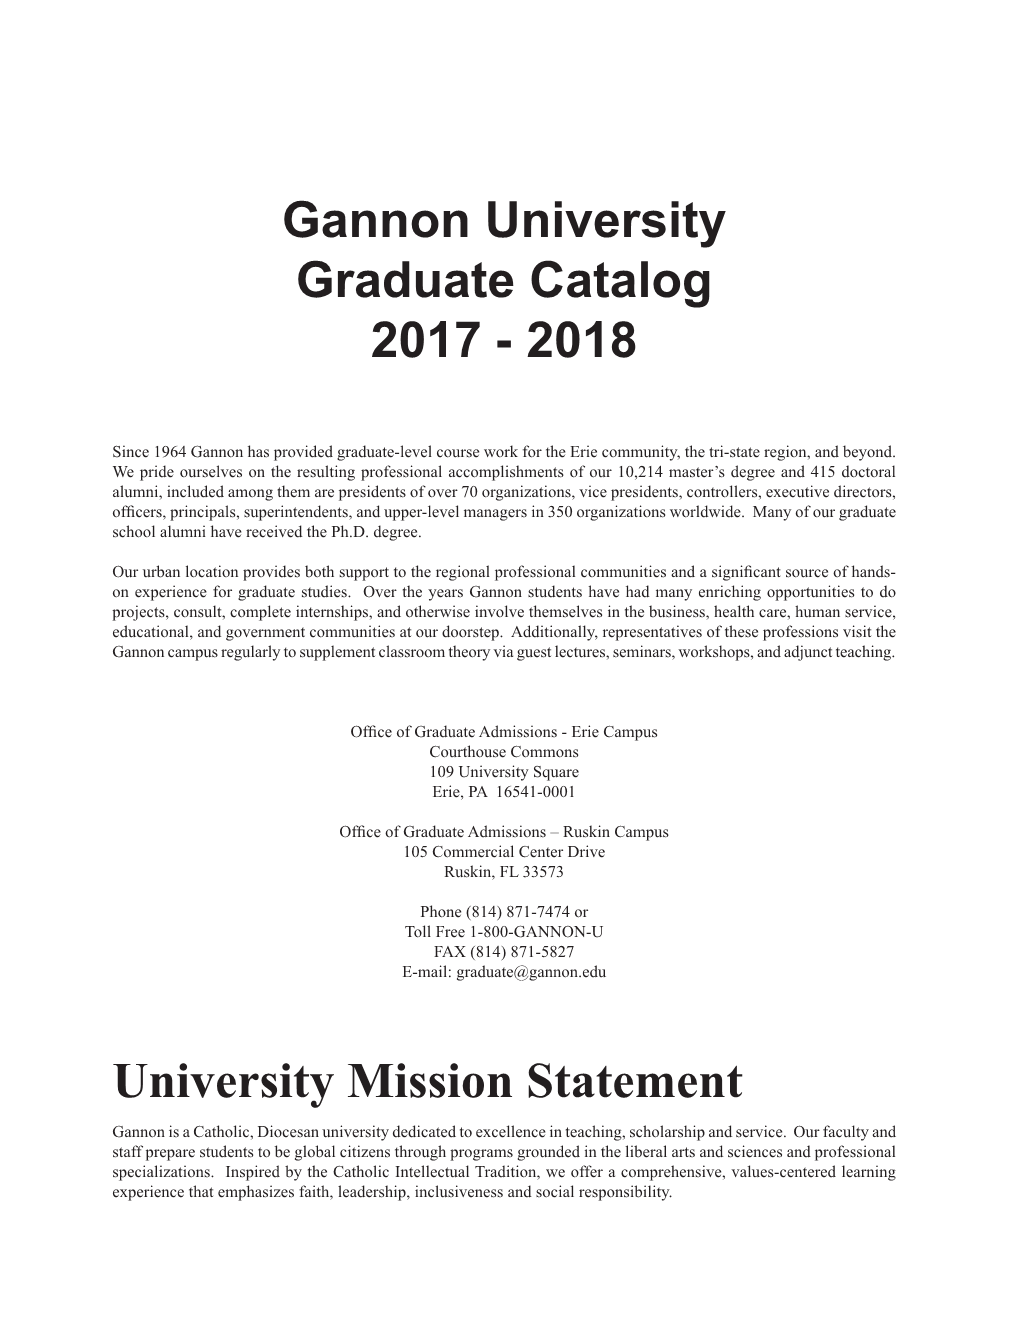 Gannon University Graduate Catalog 2017 - 2018